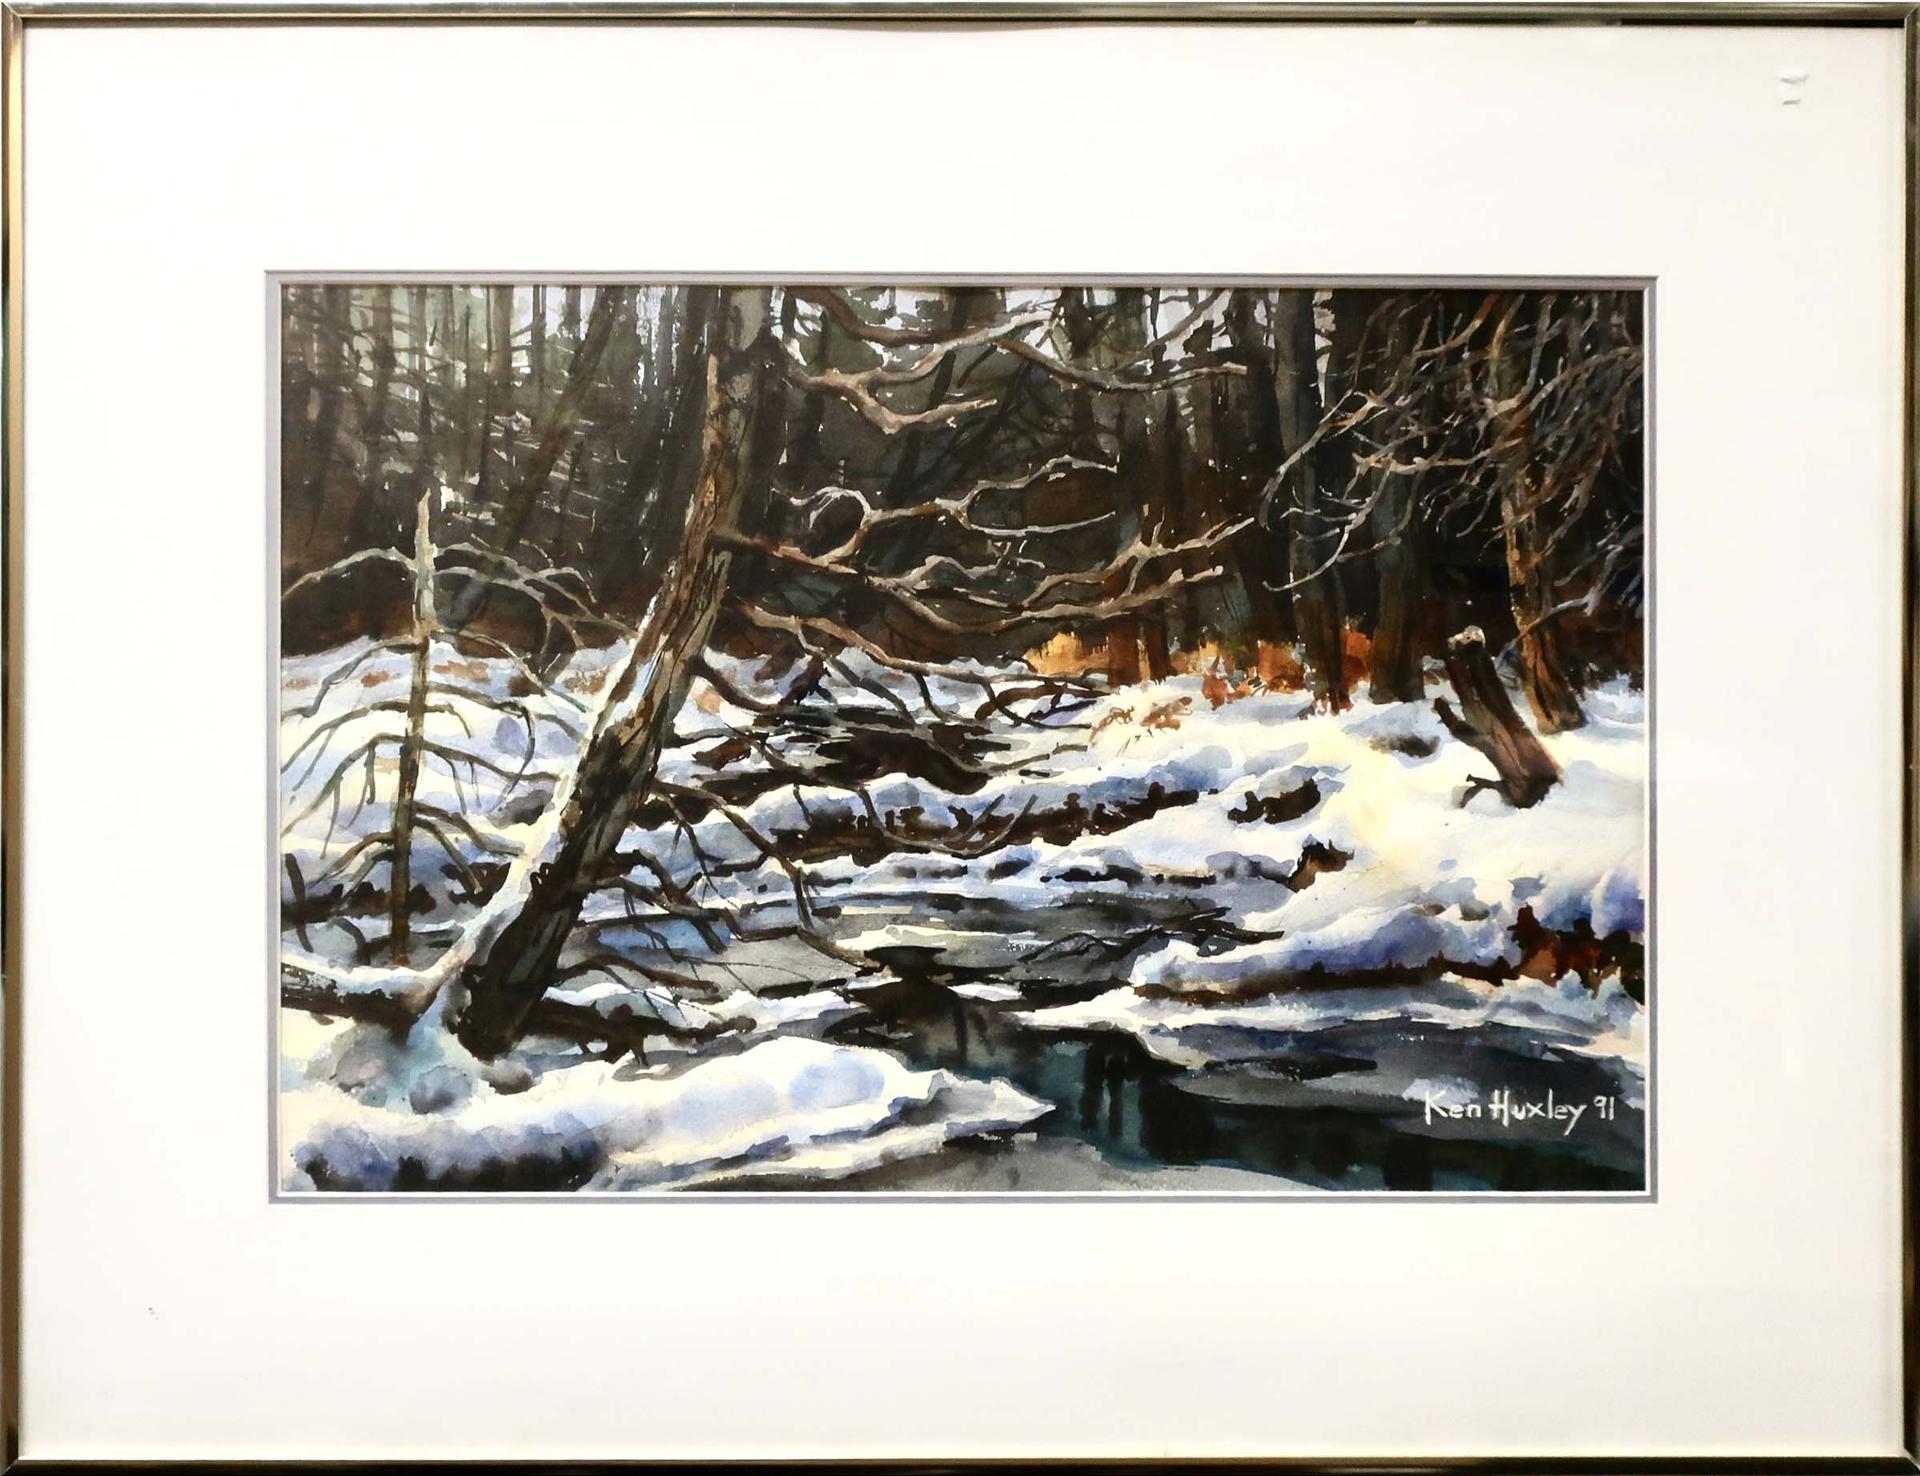 Ken Huxley - Winter Reflections - Grindstone Creek (Waterdown, Ont.)